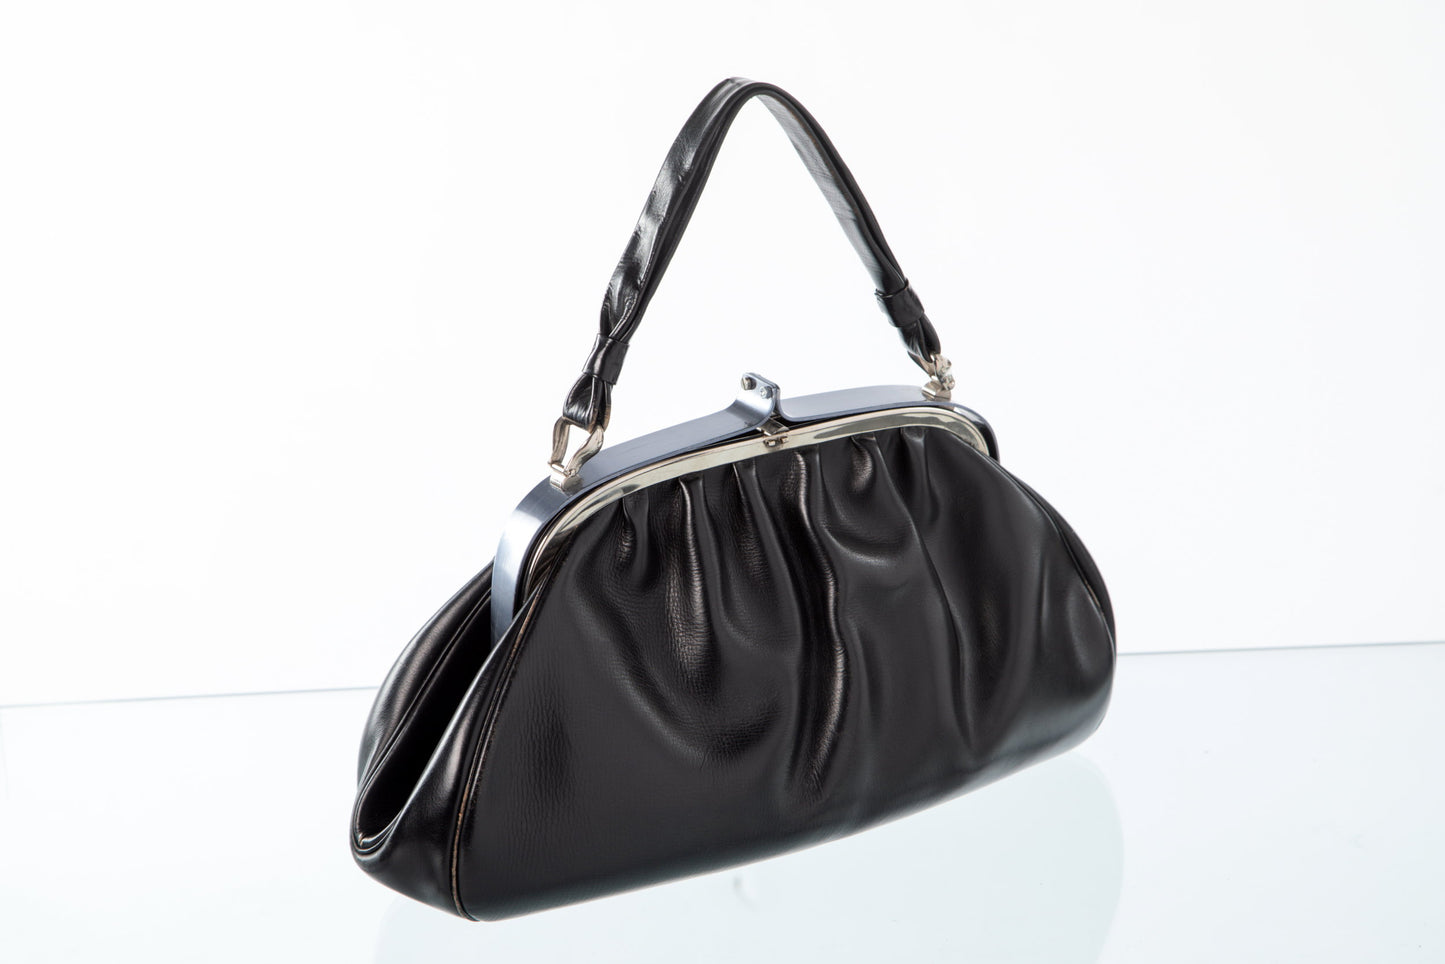 Black leather handbag and shoulder bag from the 50s